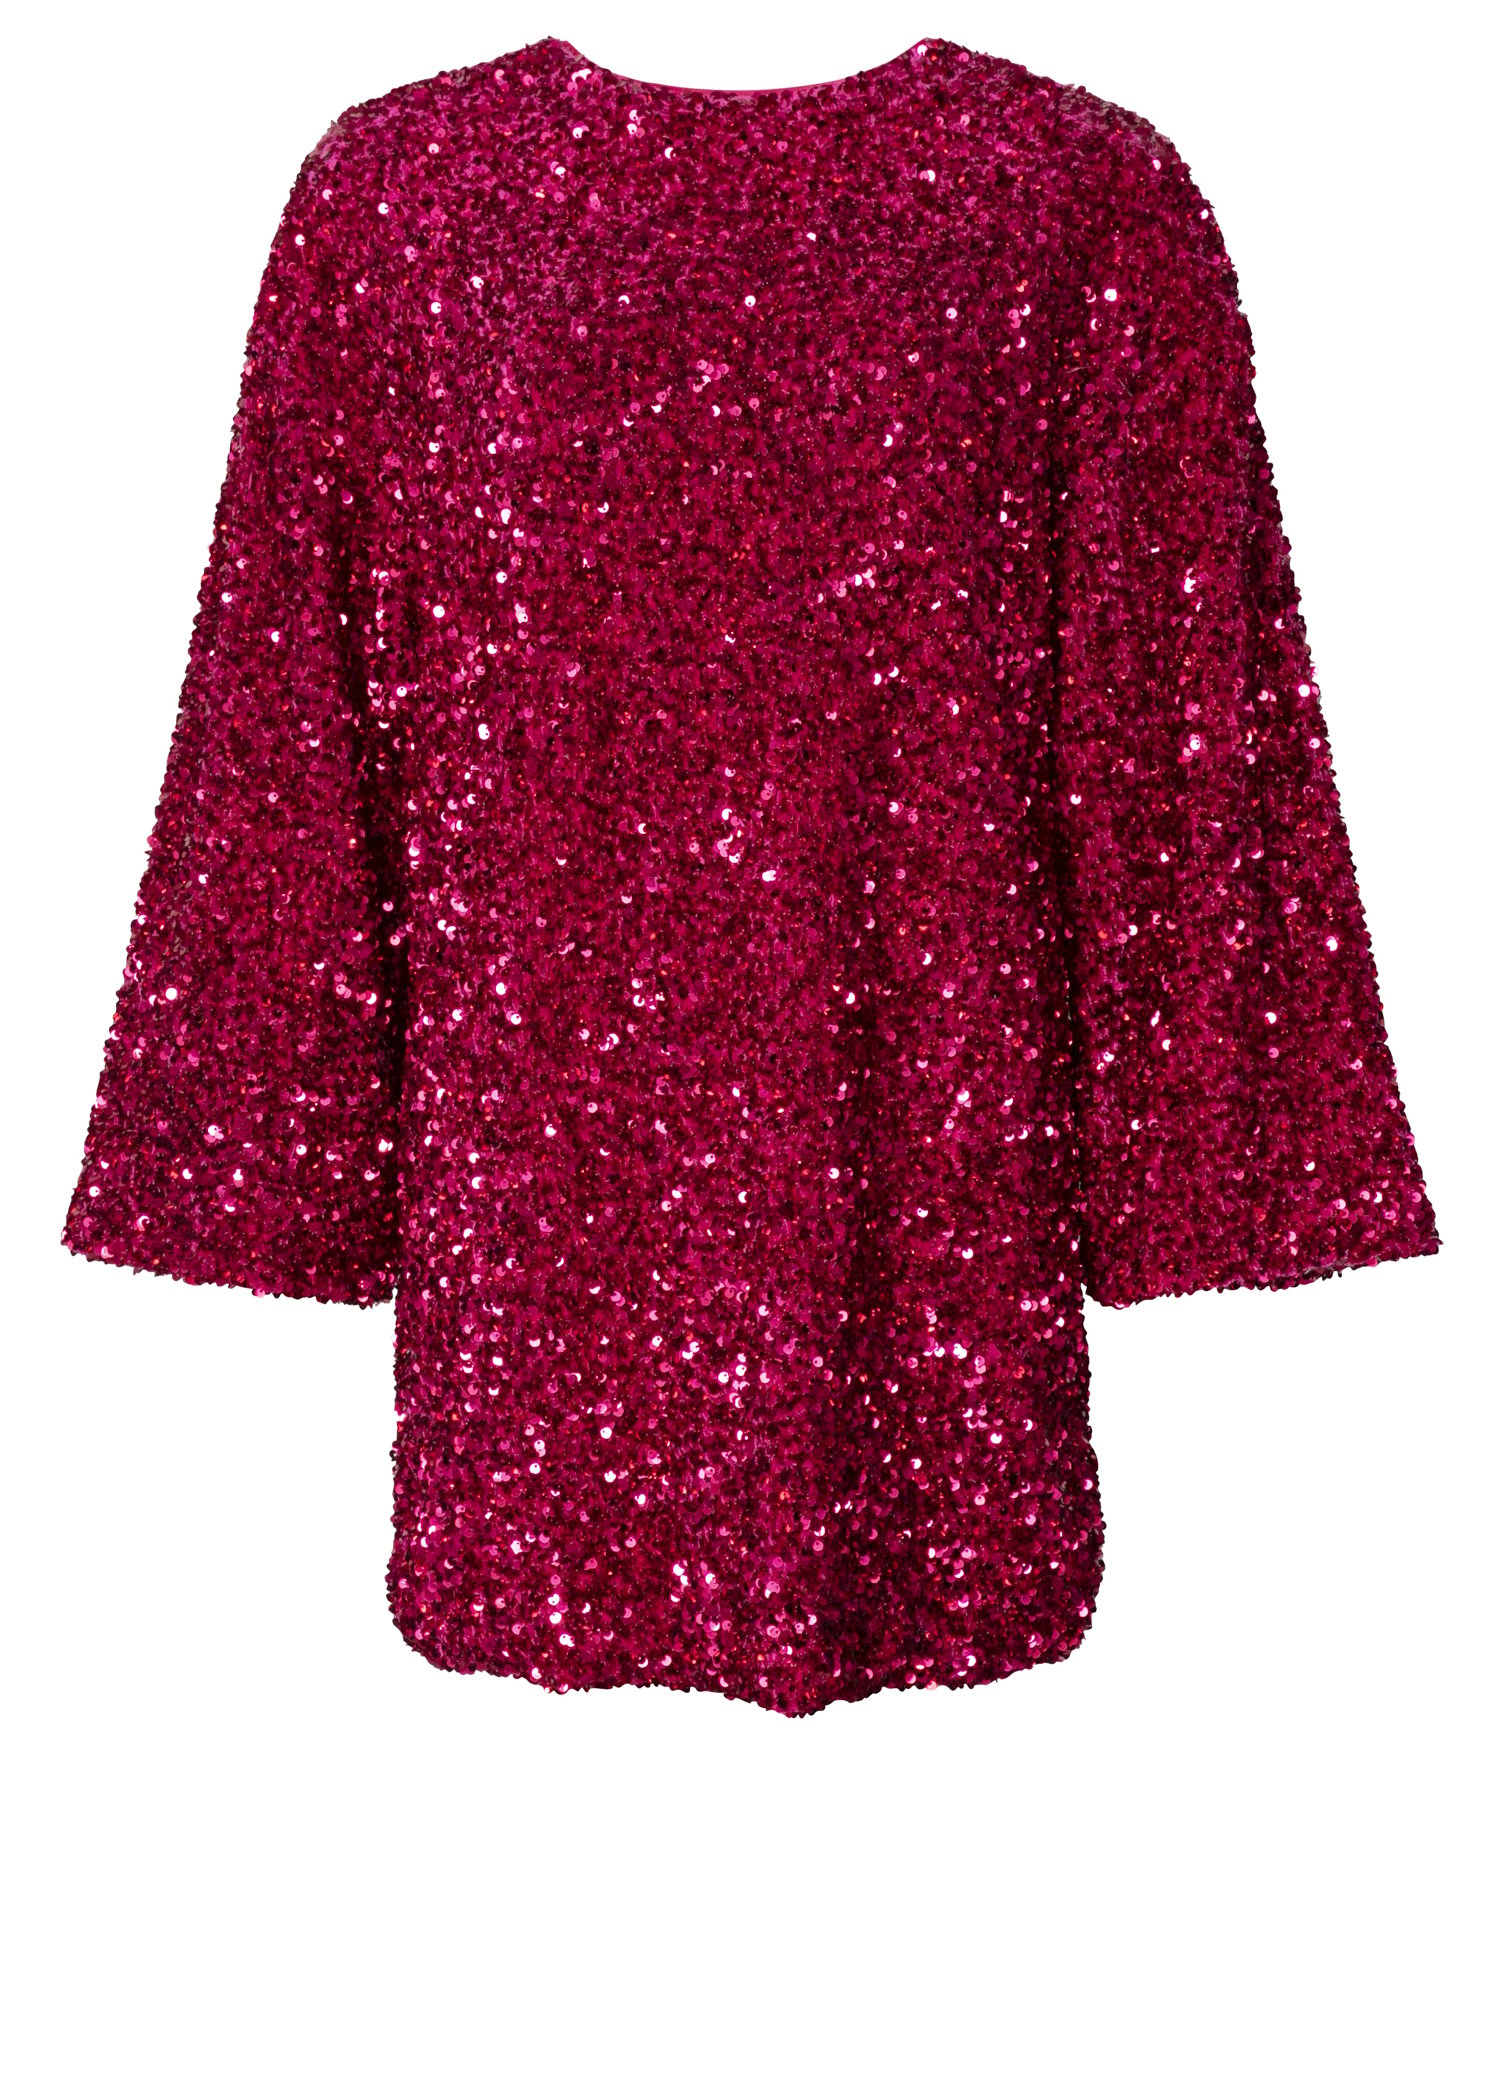 Pink sequin dress